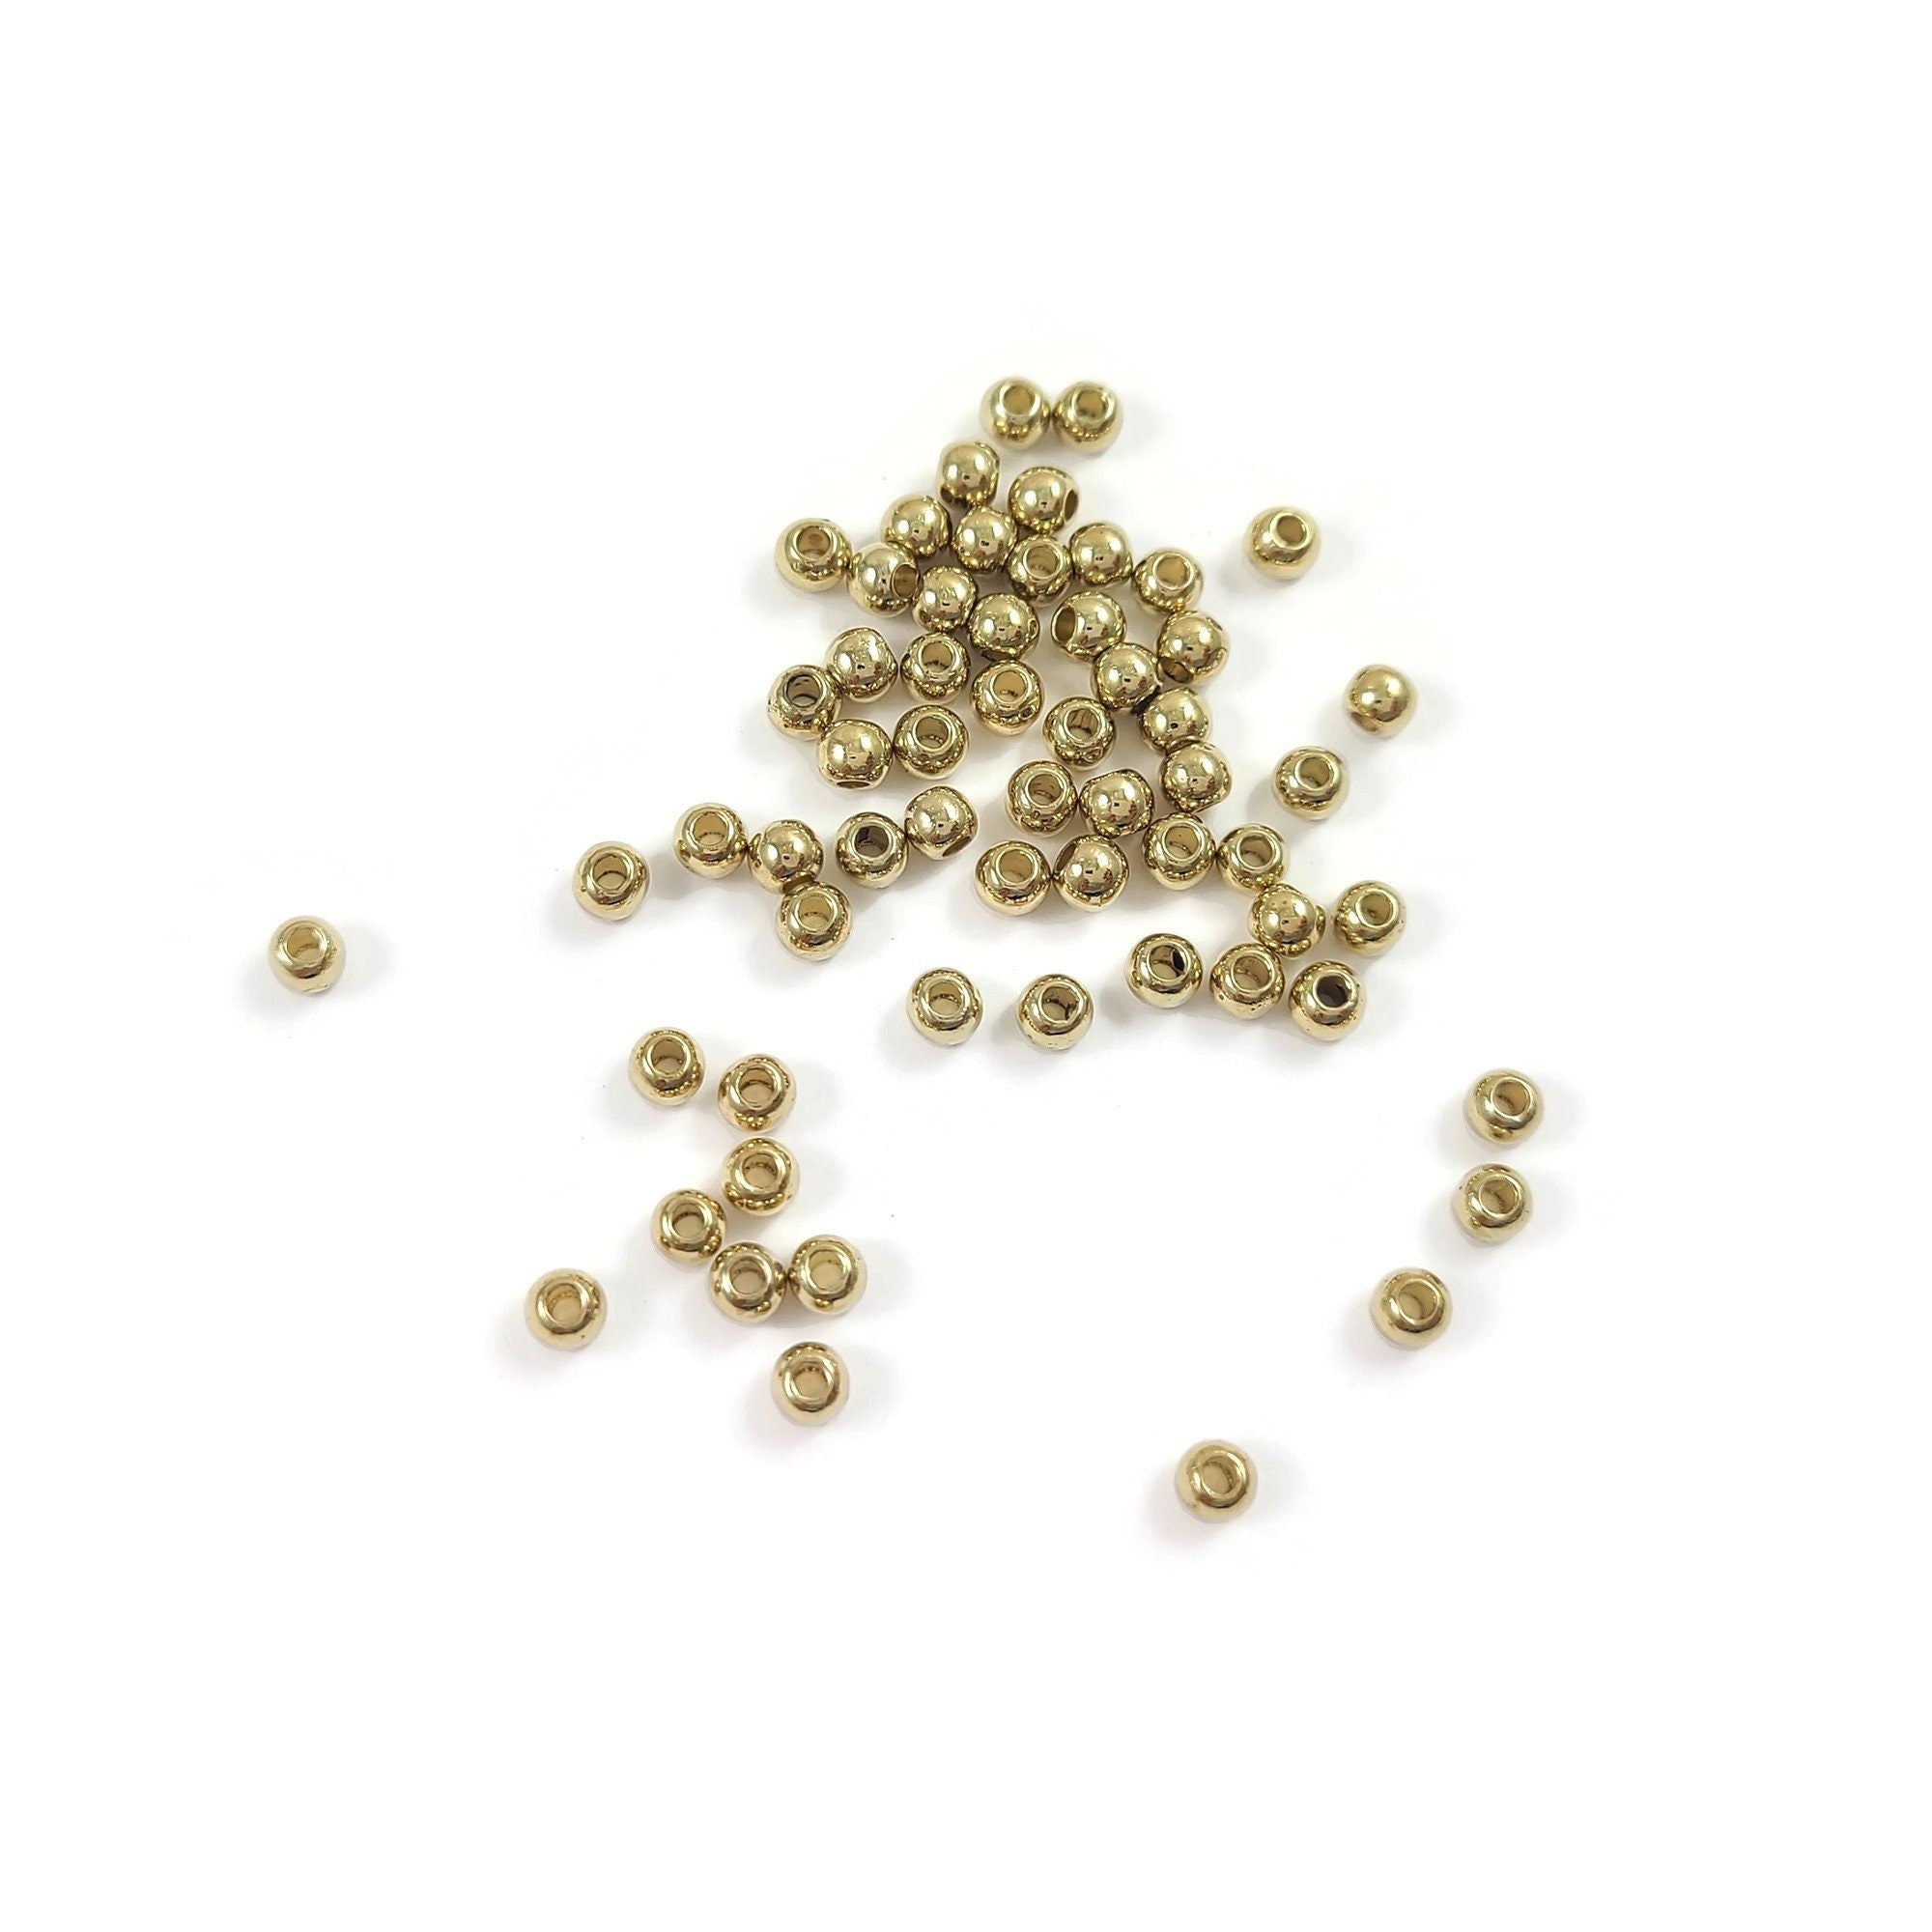 3mm gold metallic plastic seed bead, Jewelry making cheap bulk beads